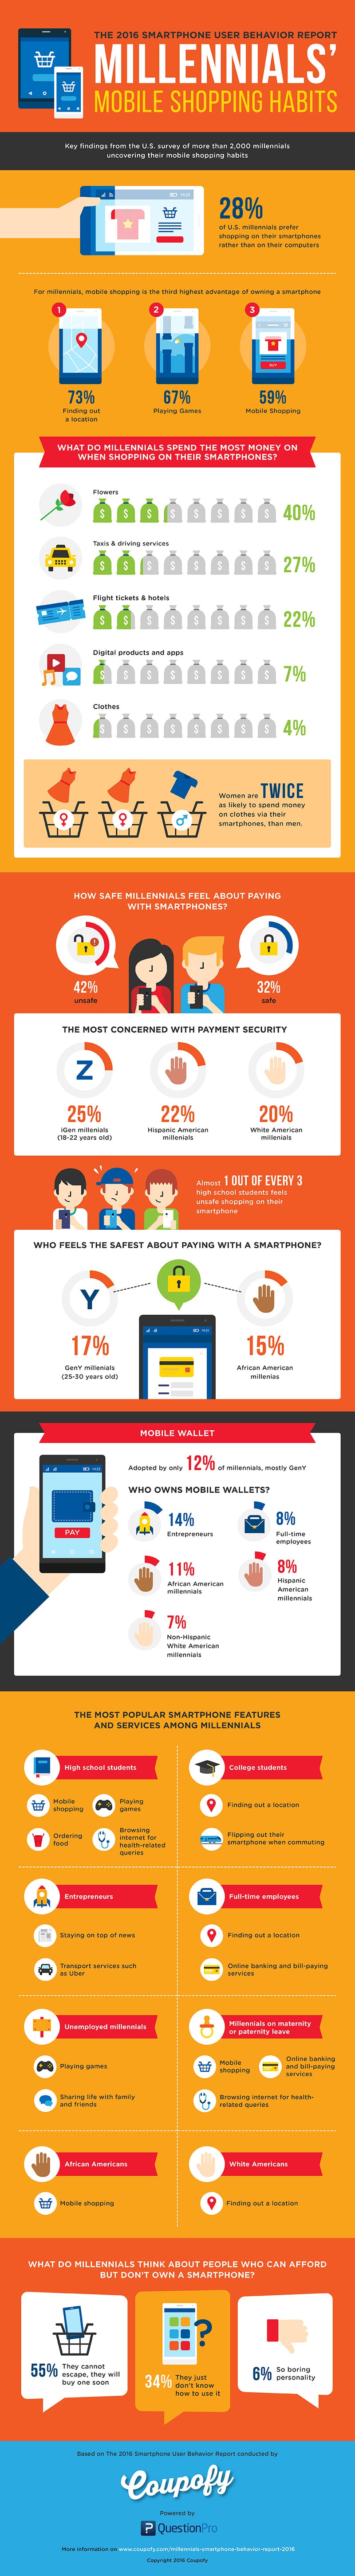 millennials mobile shopping habits